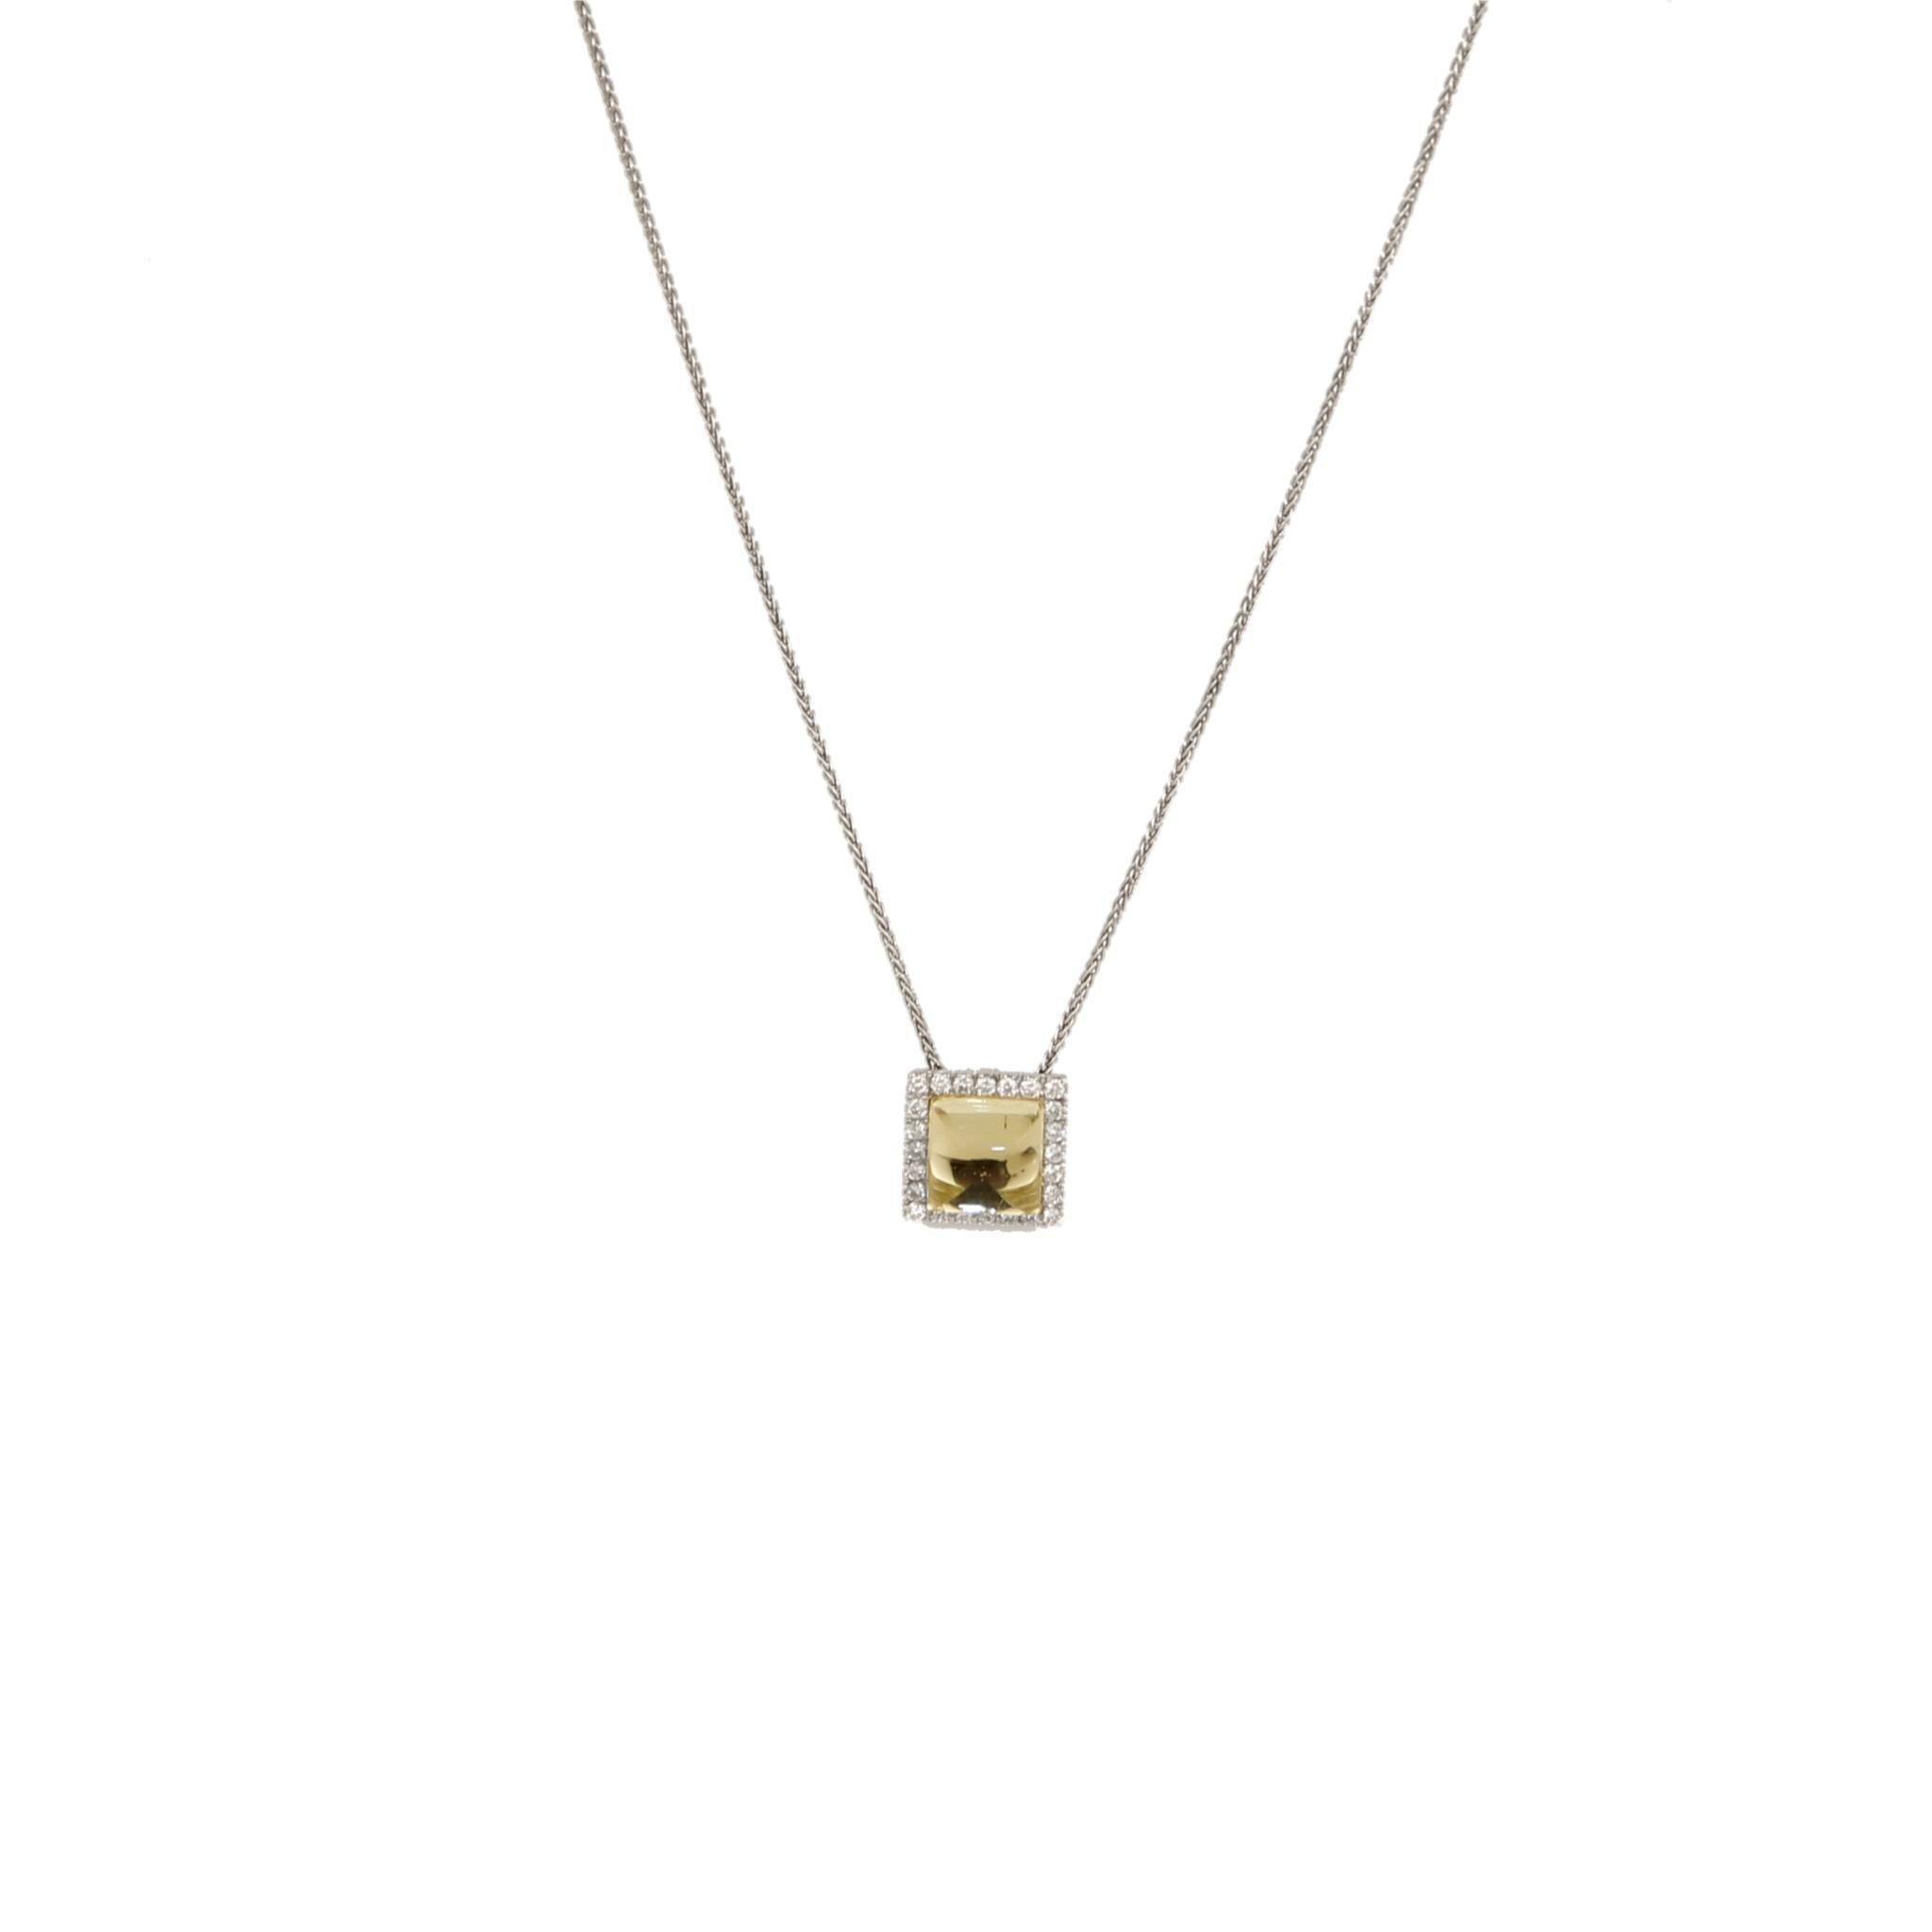 Porrati Necklace
18K White Gold
Diamond: 0.40ctw
SKU: BLU01748
Retail price: $4,900.00